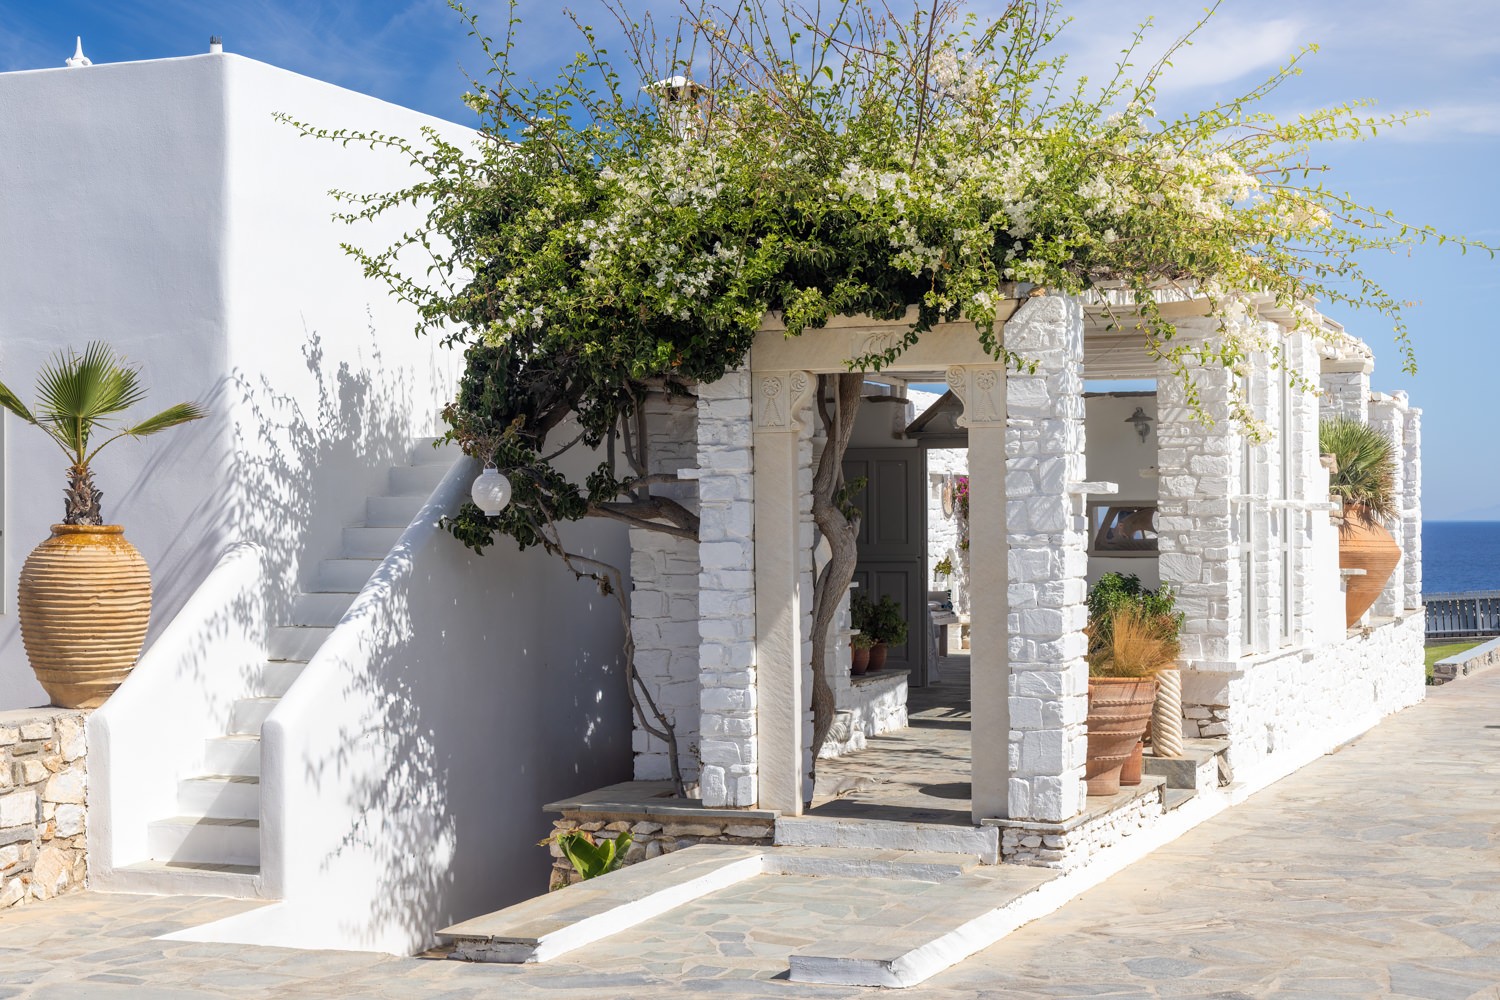 Amalgam Homes Agia Thalassa villa, Paros island: image interior gallery